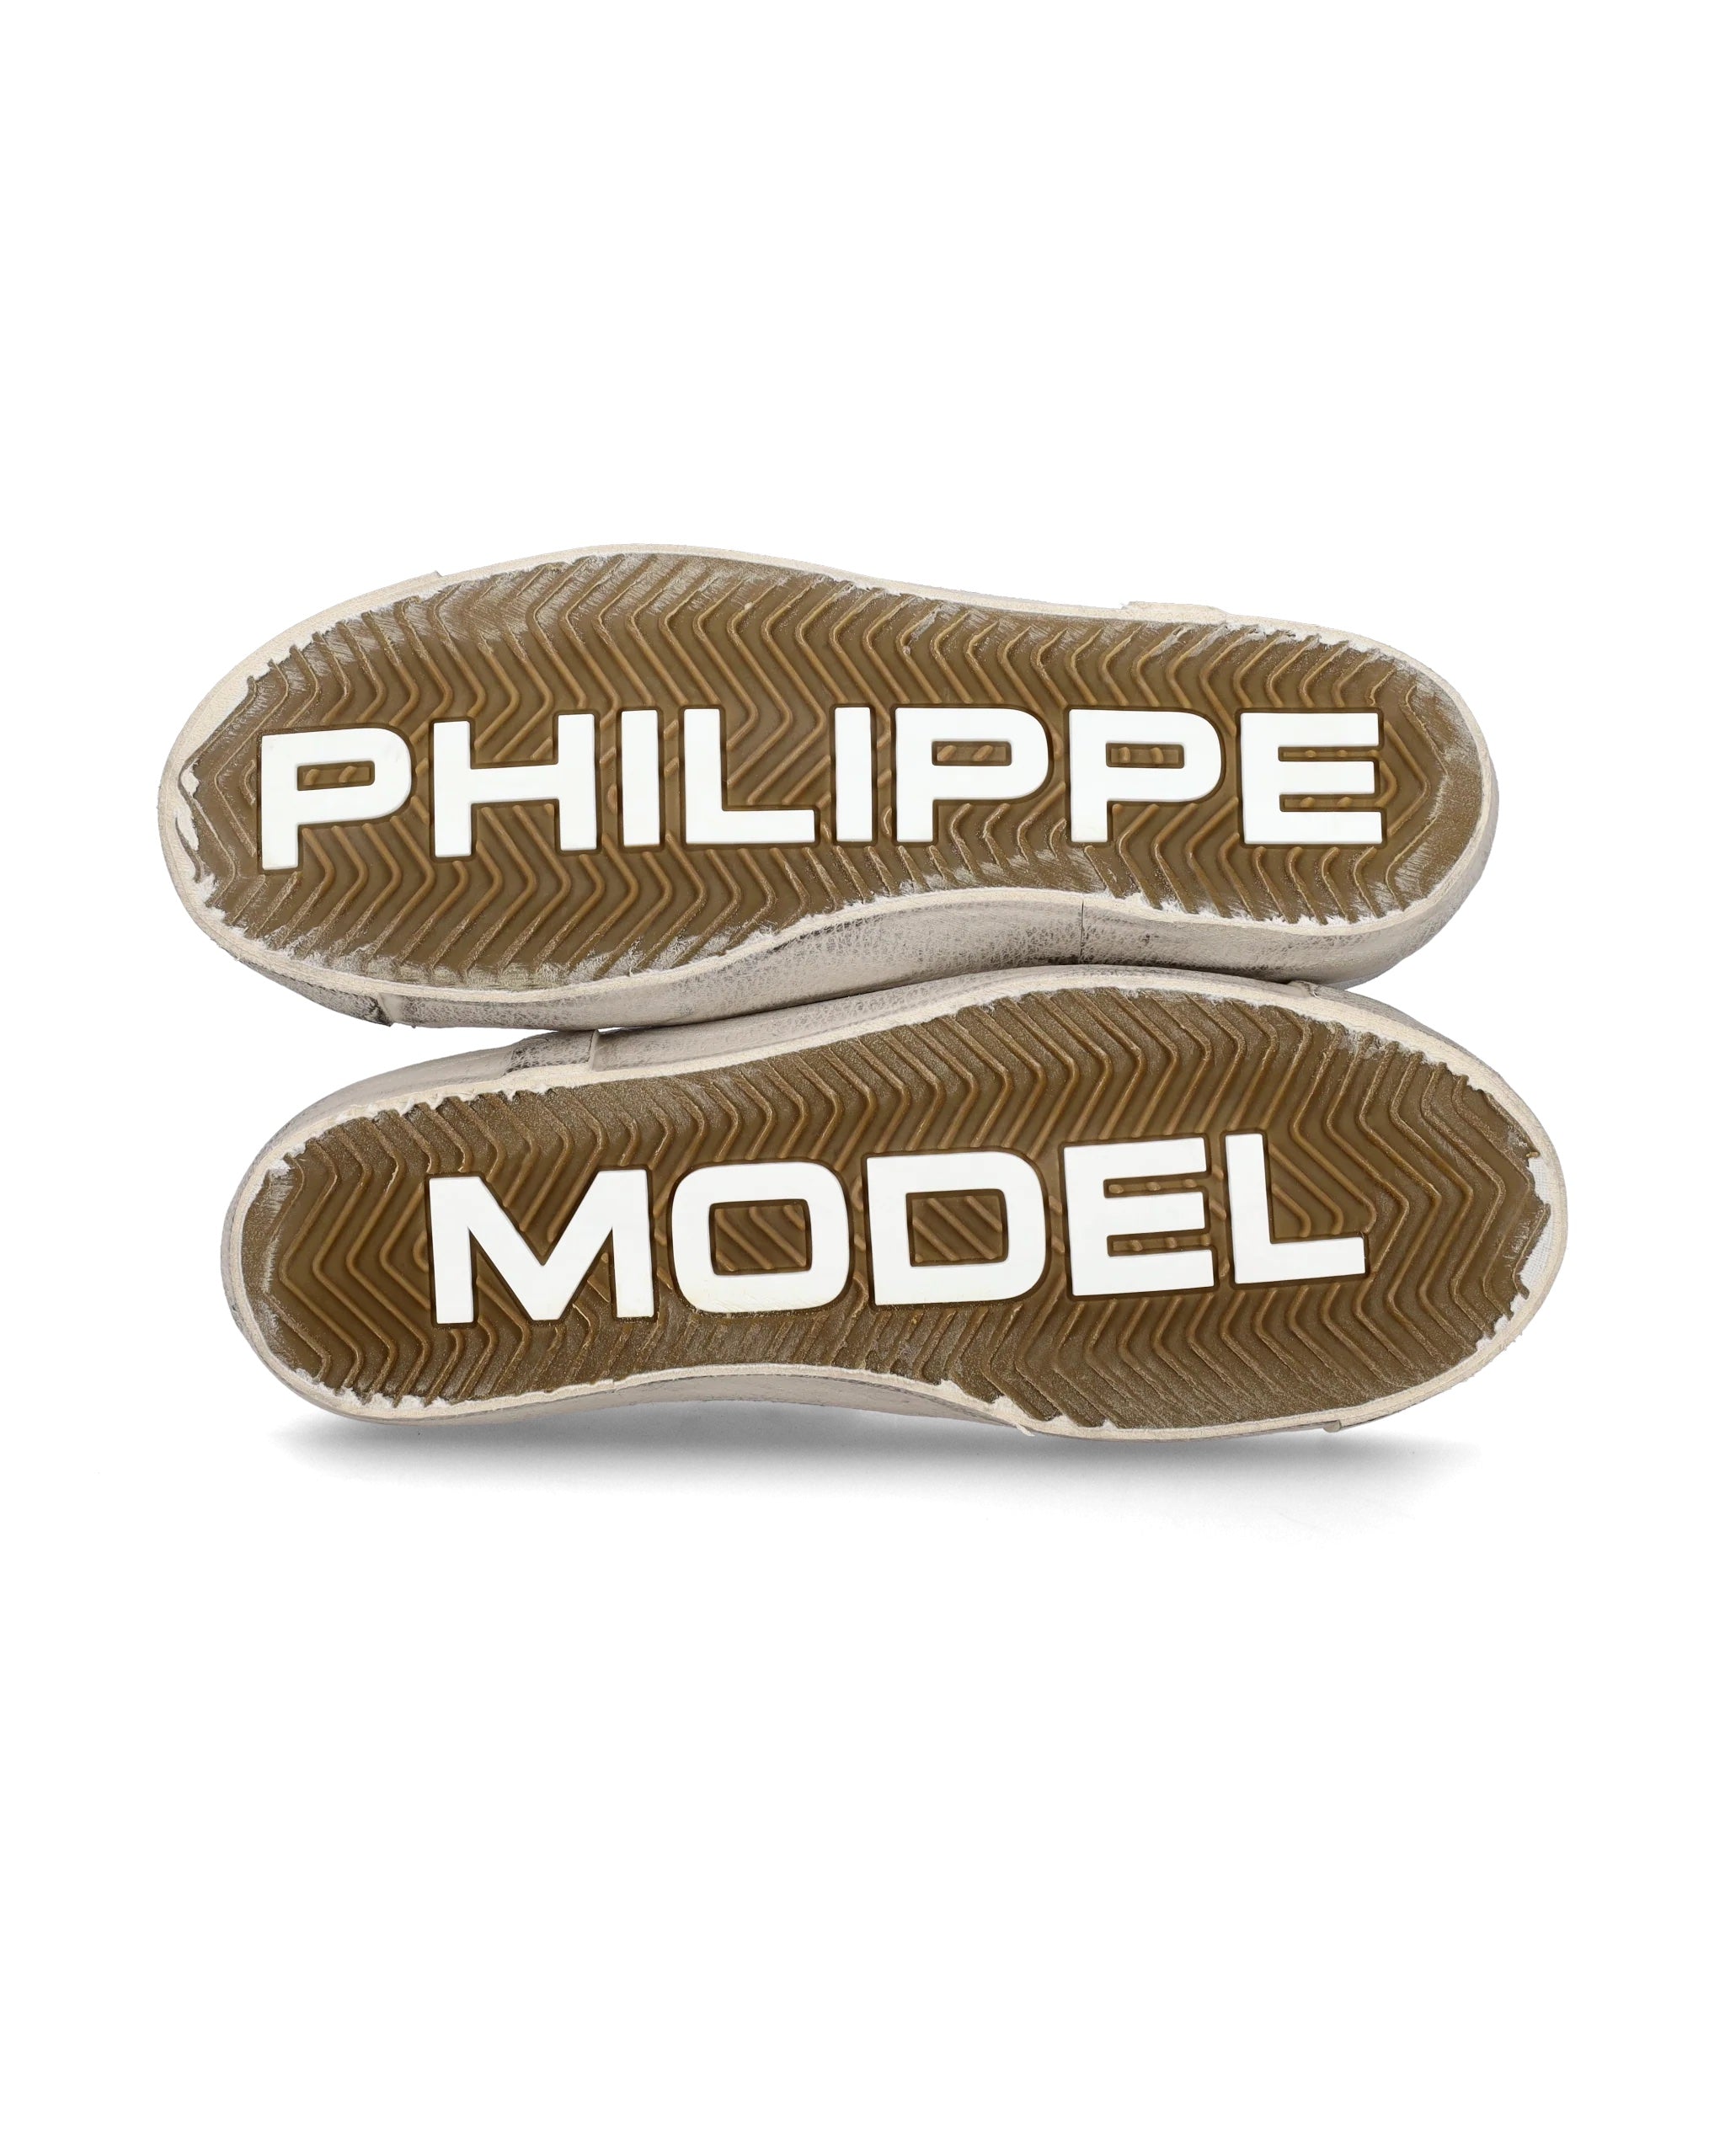 Philippe Model | PRSX Low Womens - Legere Blanc Sable